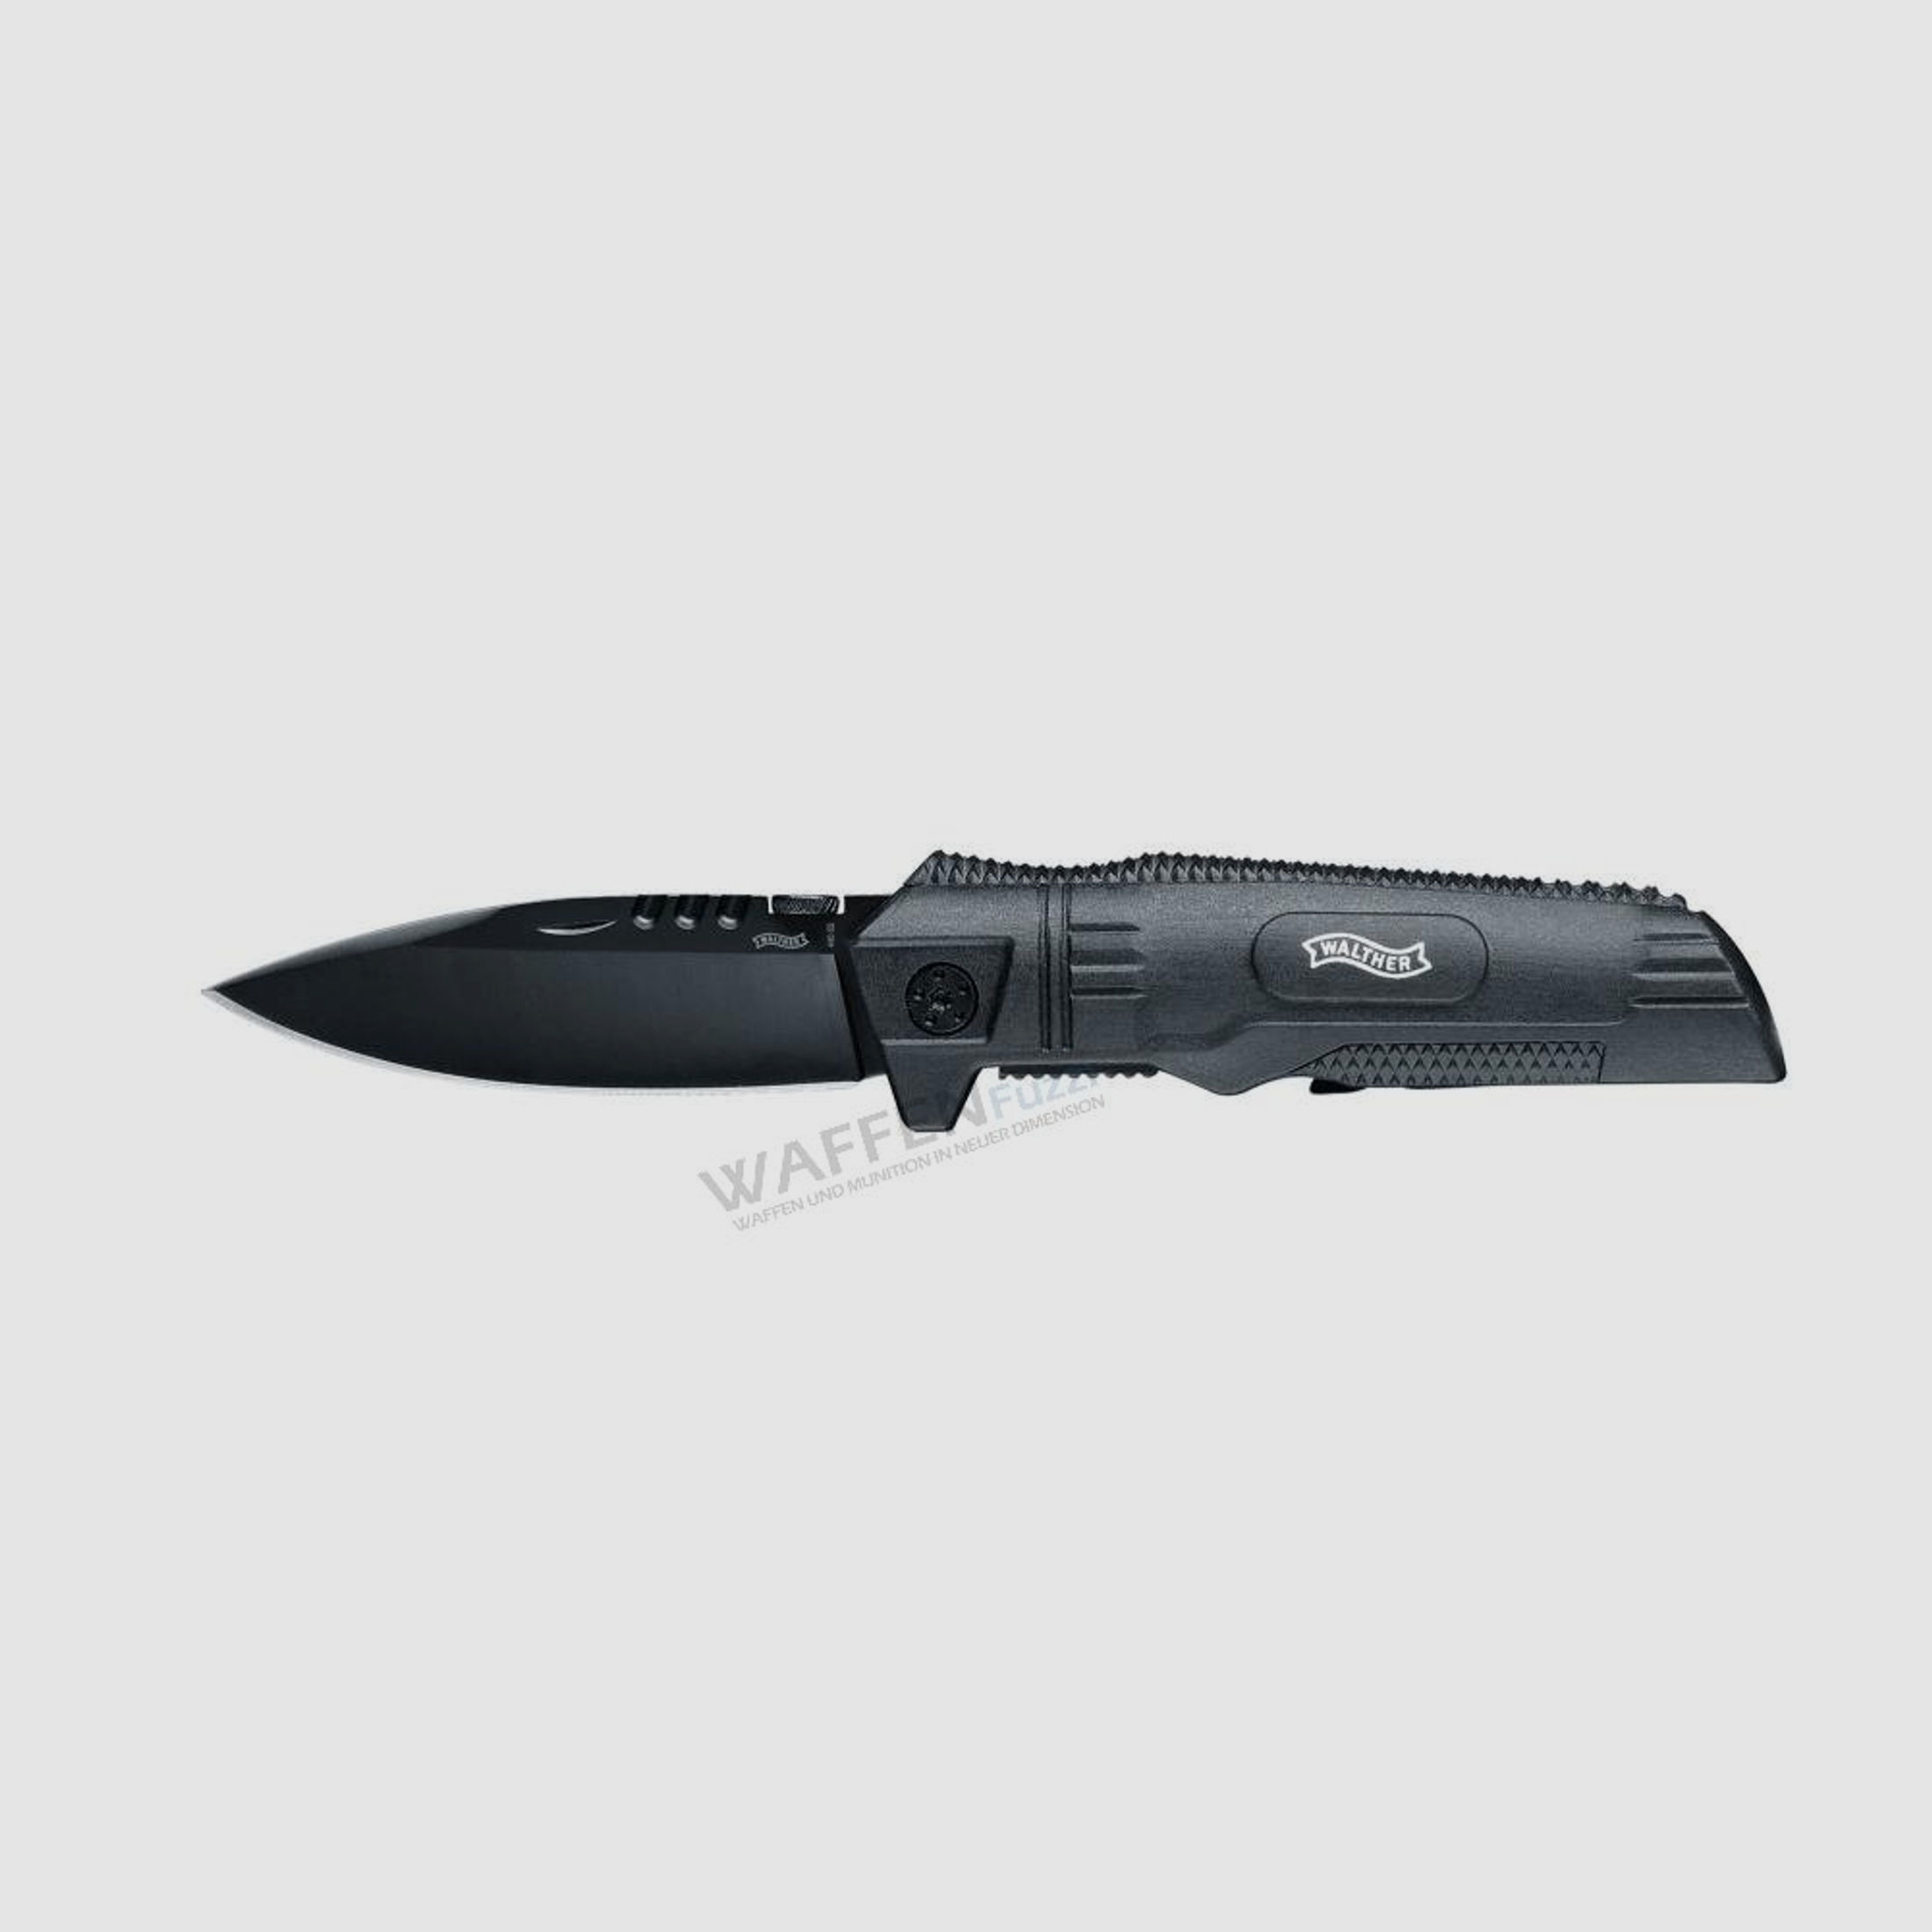 Walther SCK Sub Compagnion Knife kompaktes Einhandmesser